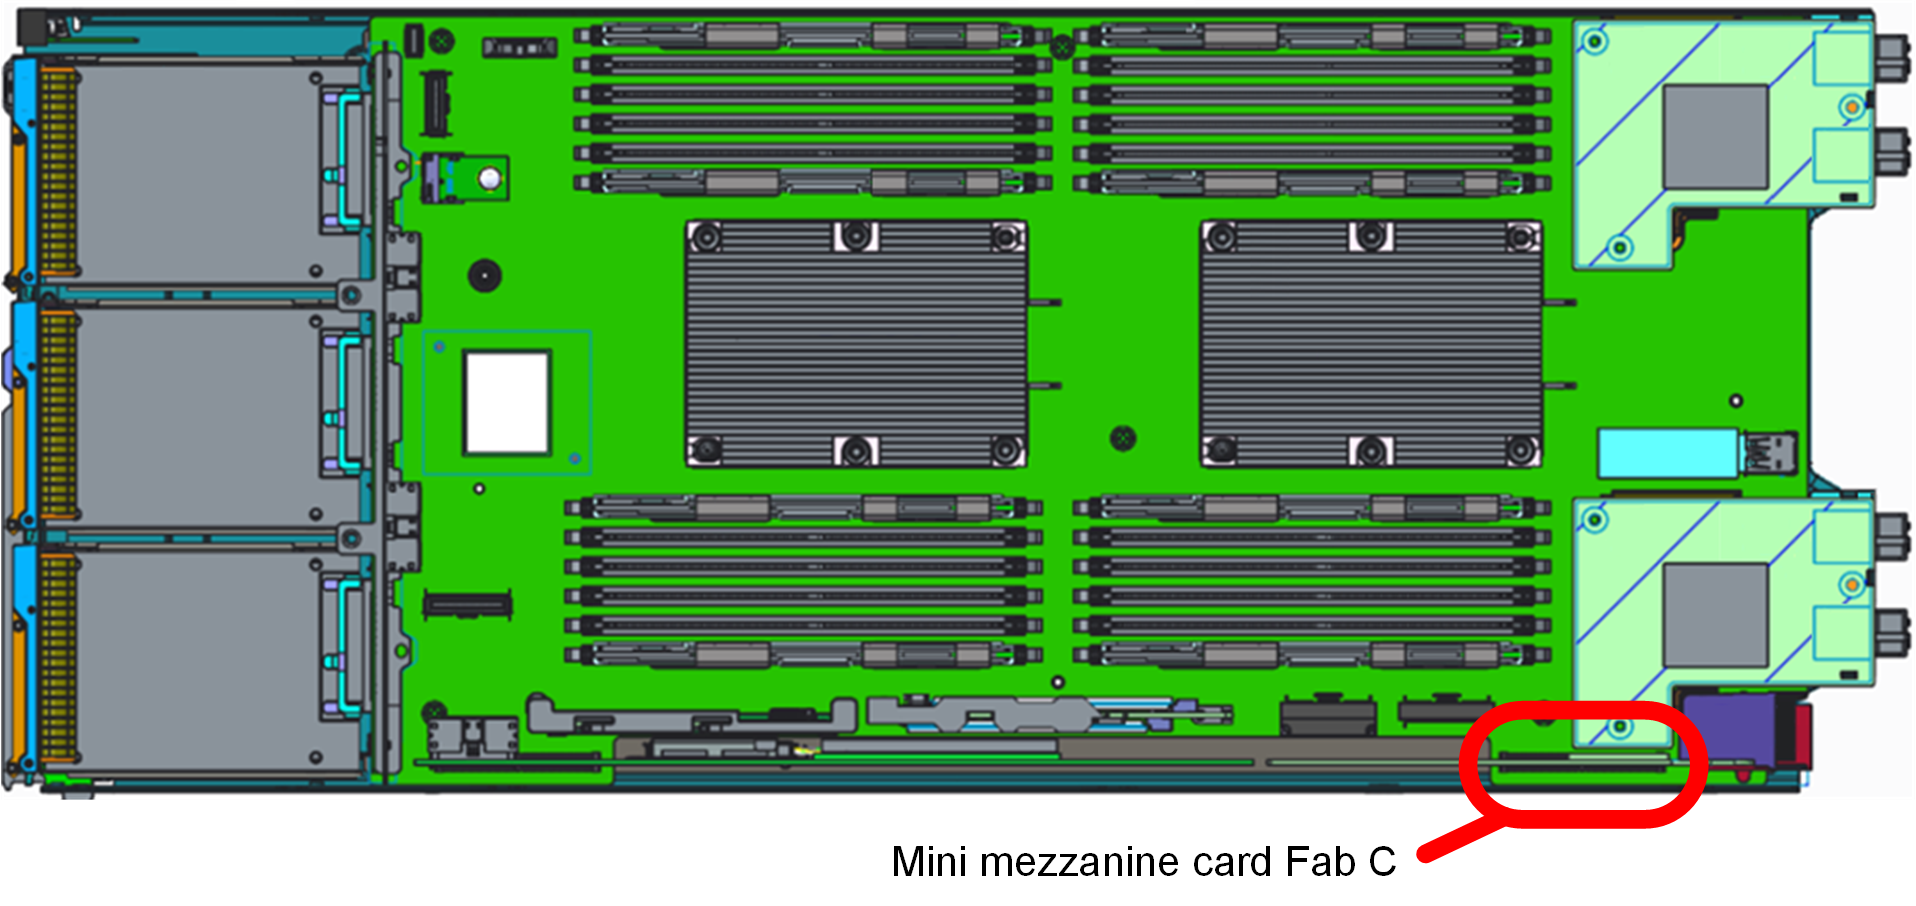 MX740c mini-mezzanine card